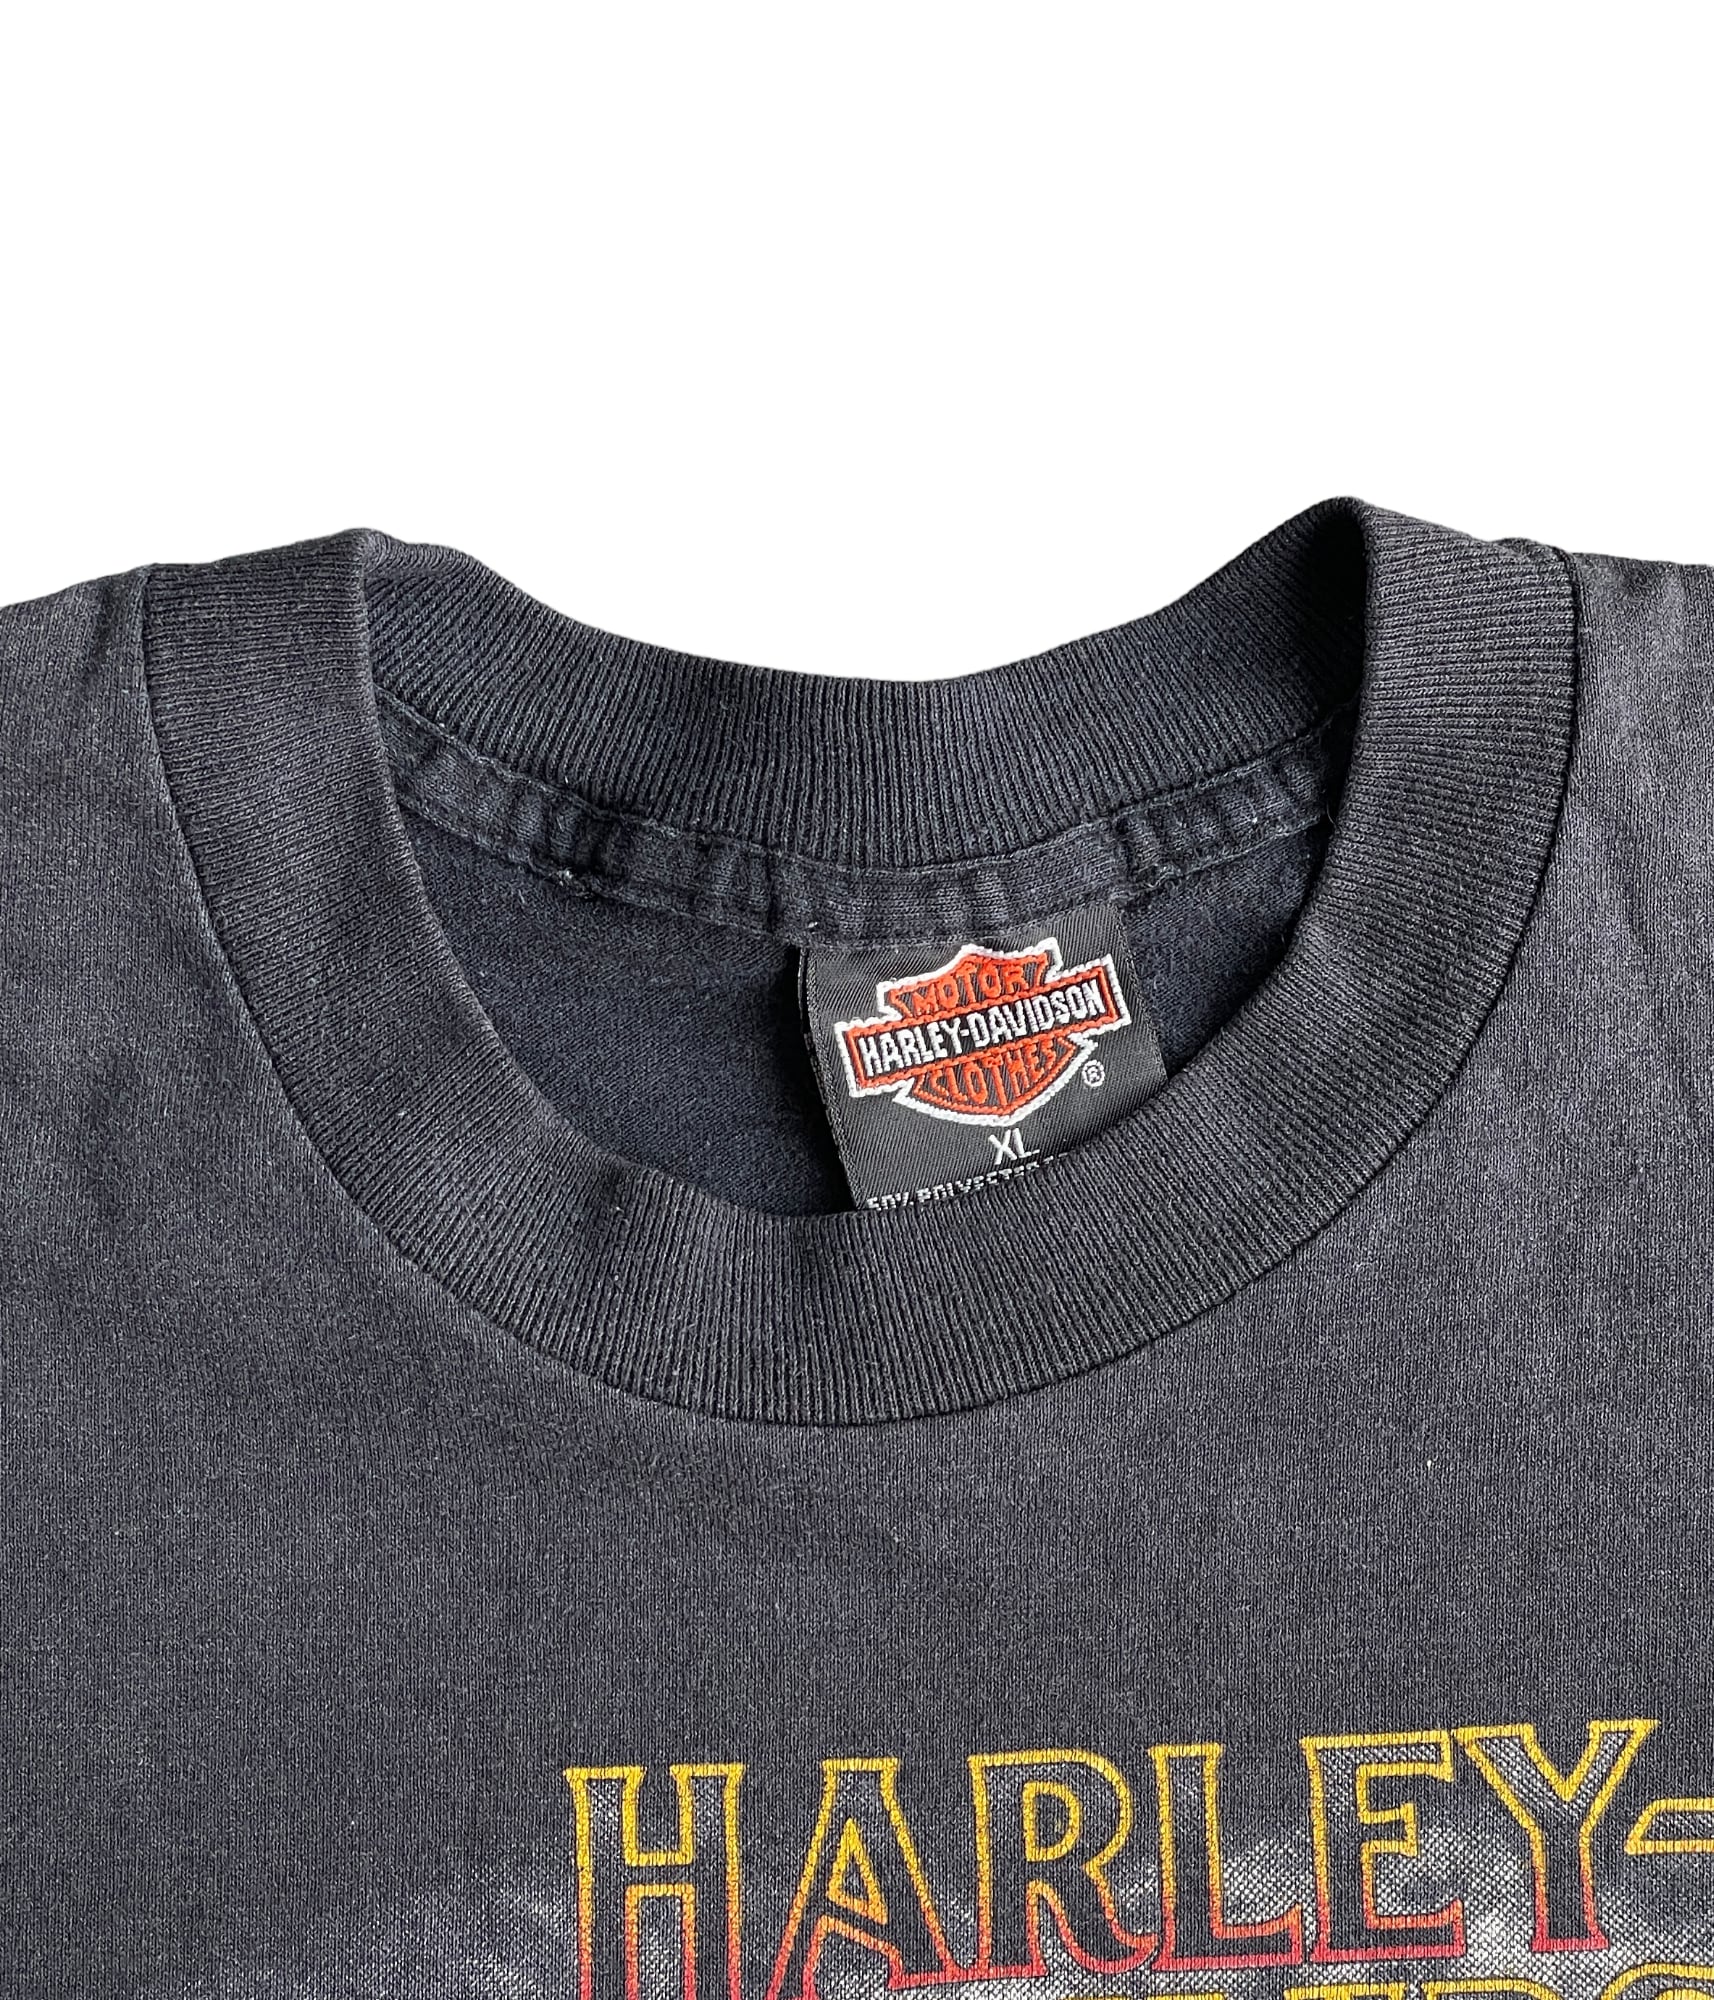 Vintage s T shirt  HARLEY DAVIDSON    BEGGARS BANQUET公式通販